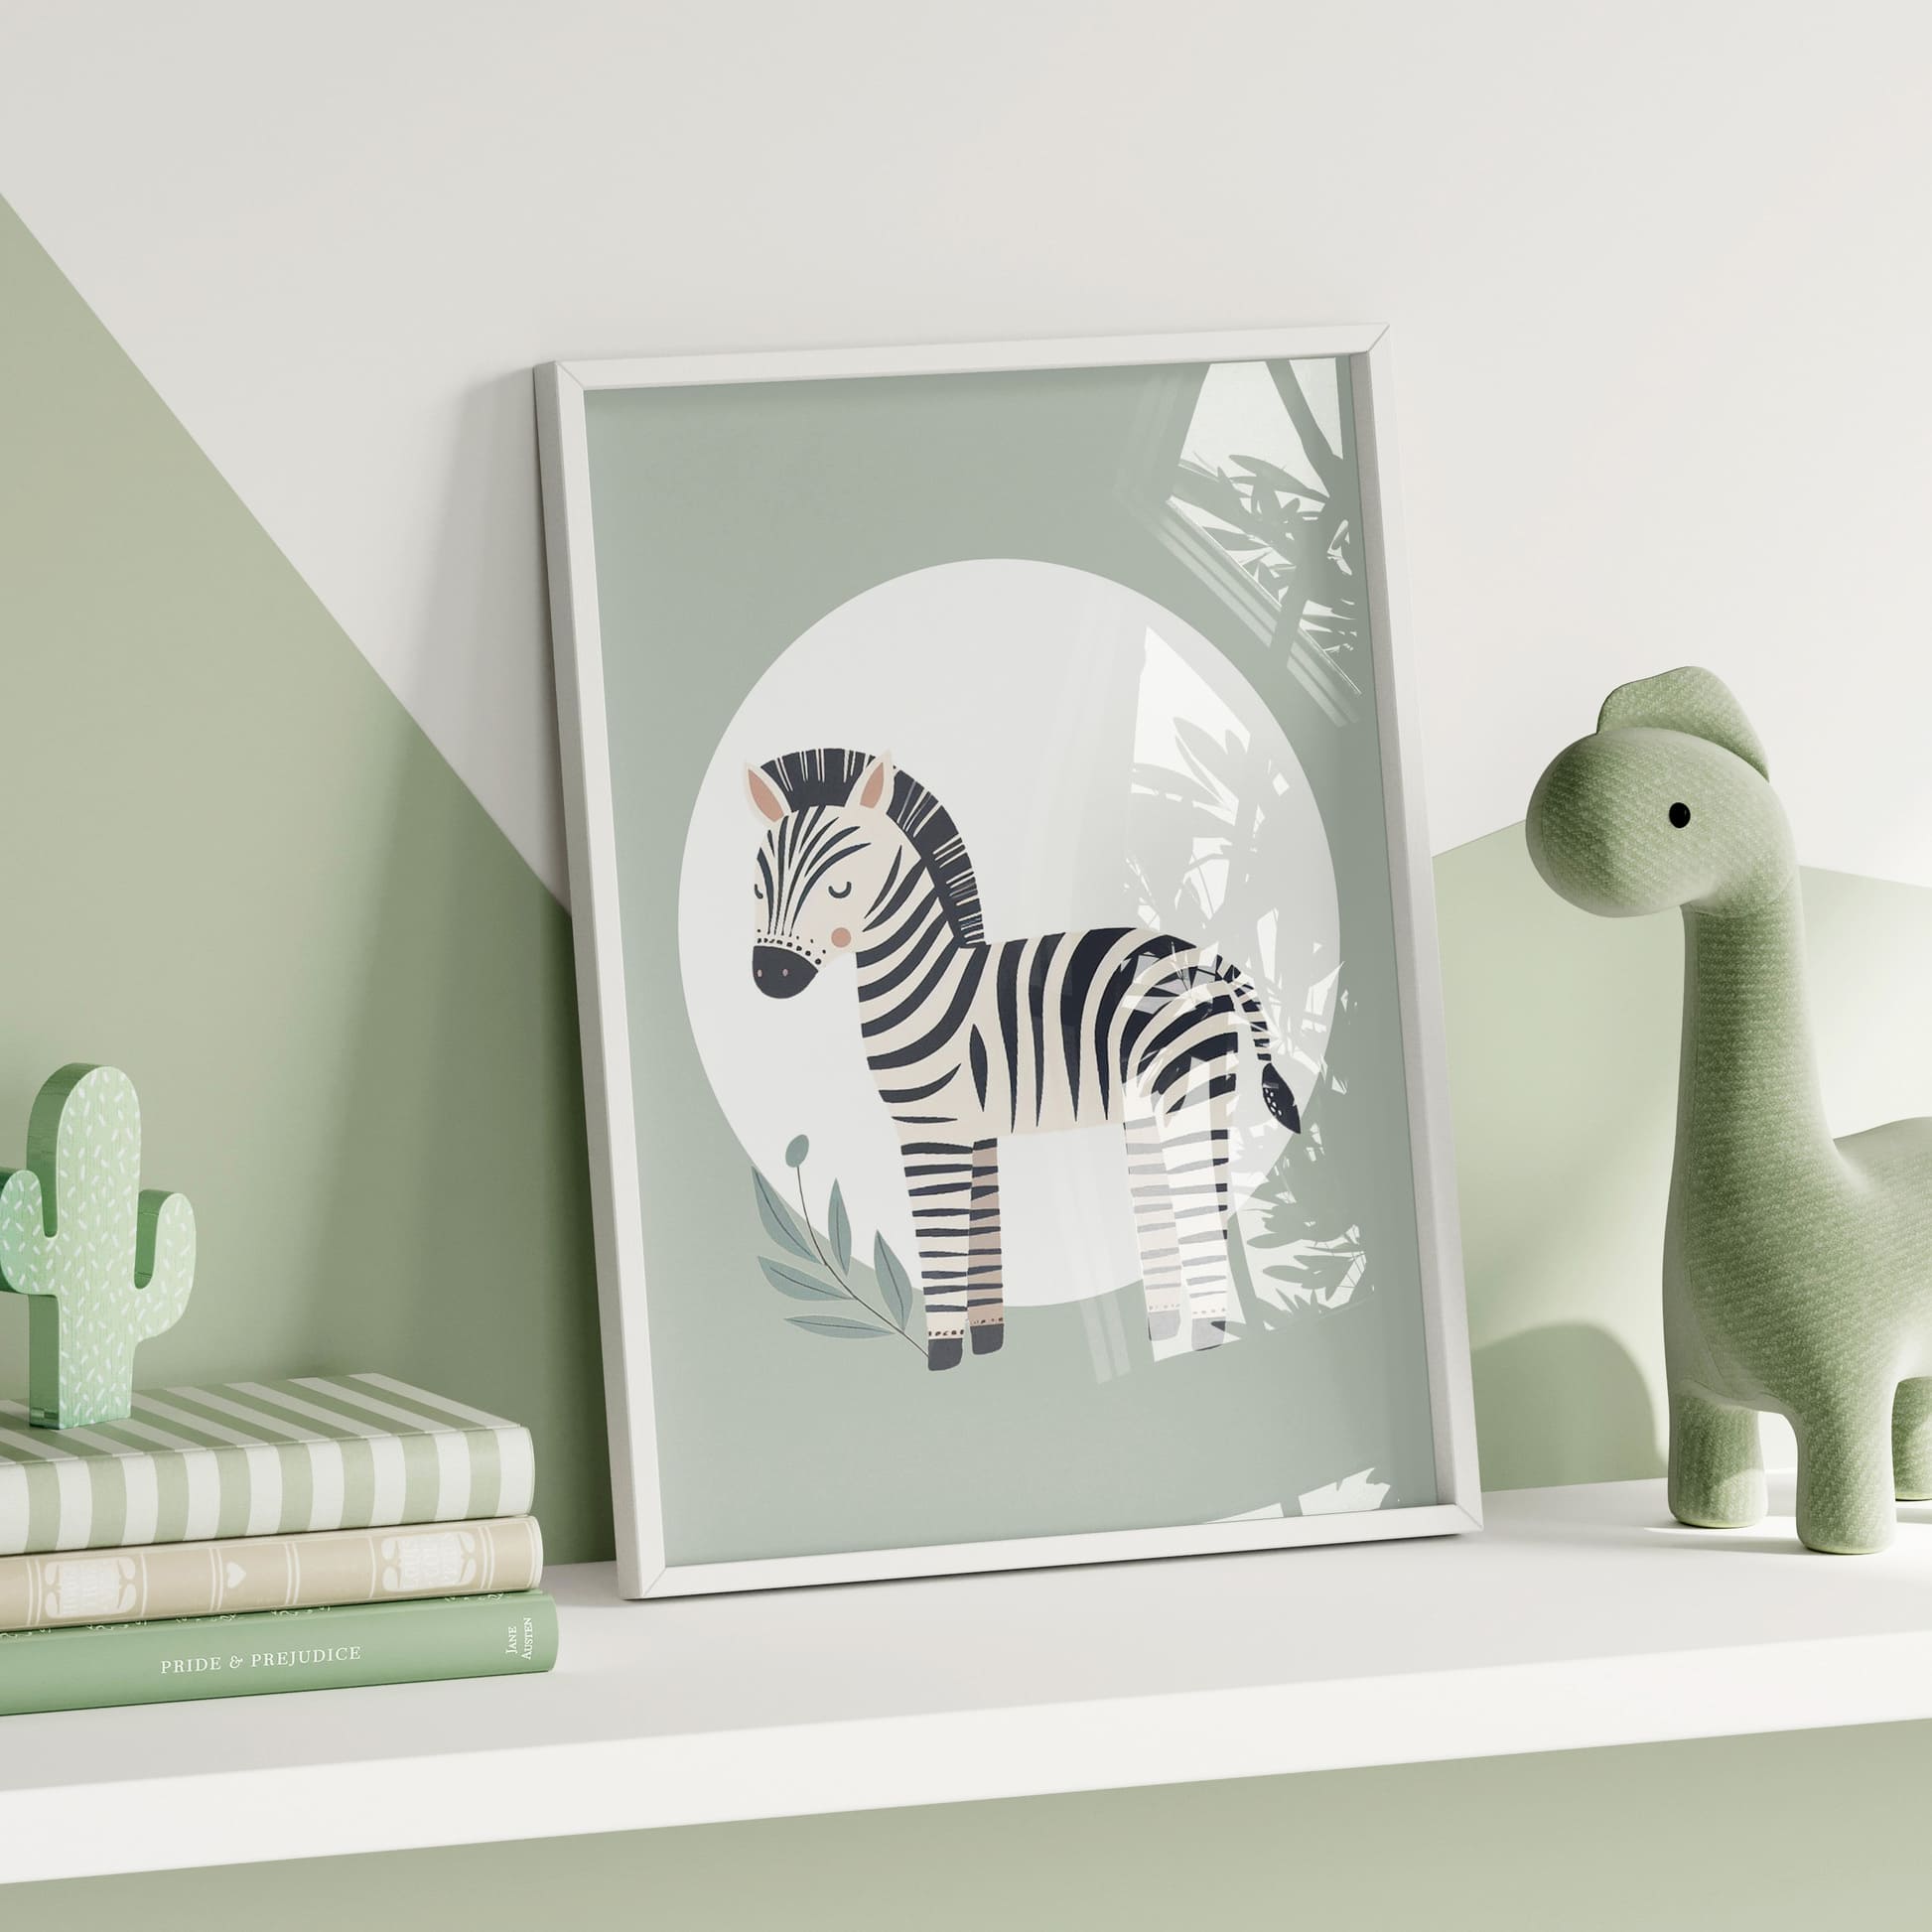 A4 Nursery Print. Light green background with a white circle, overlaid with boho style zebra. Minimalist style